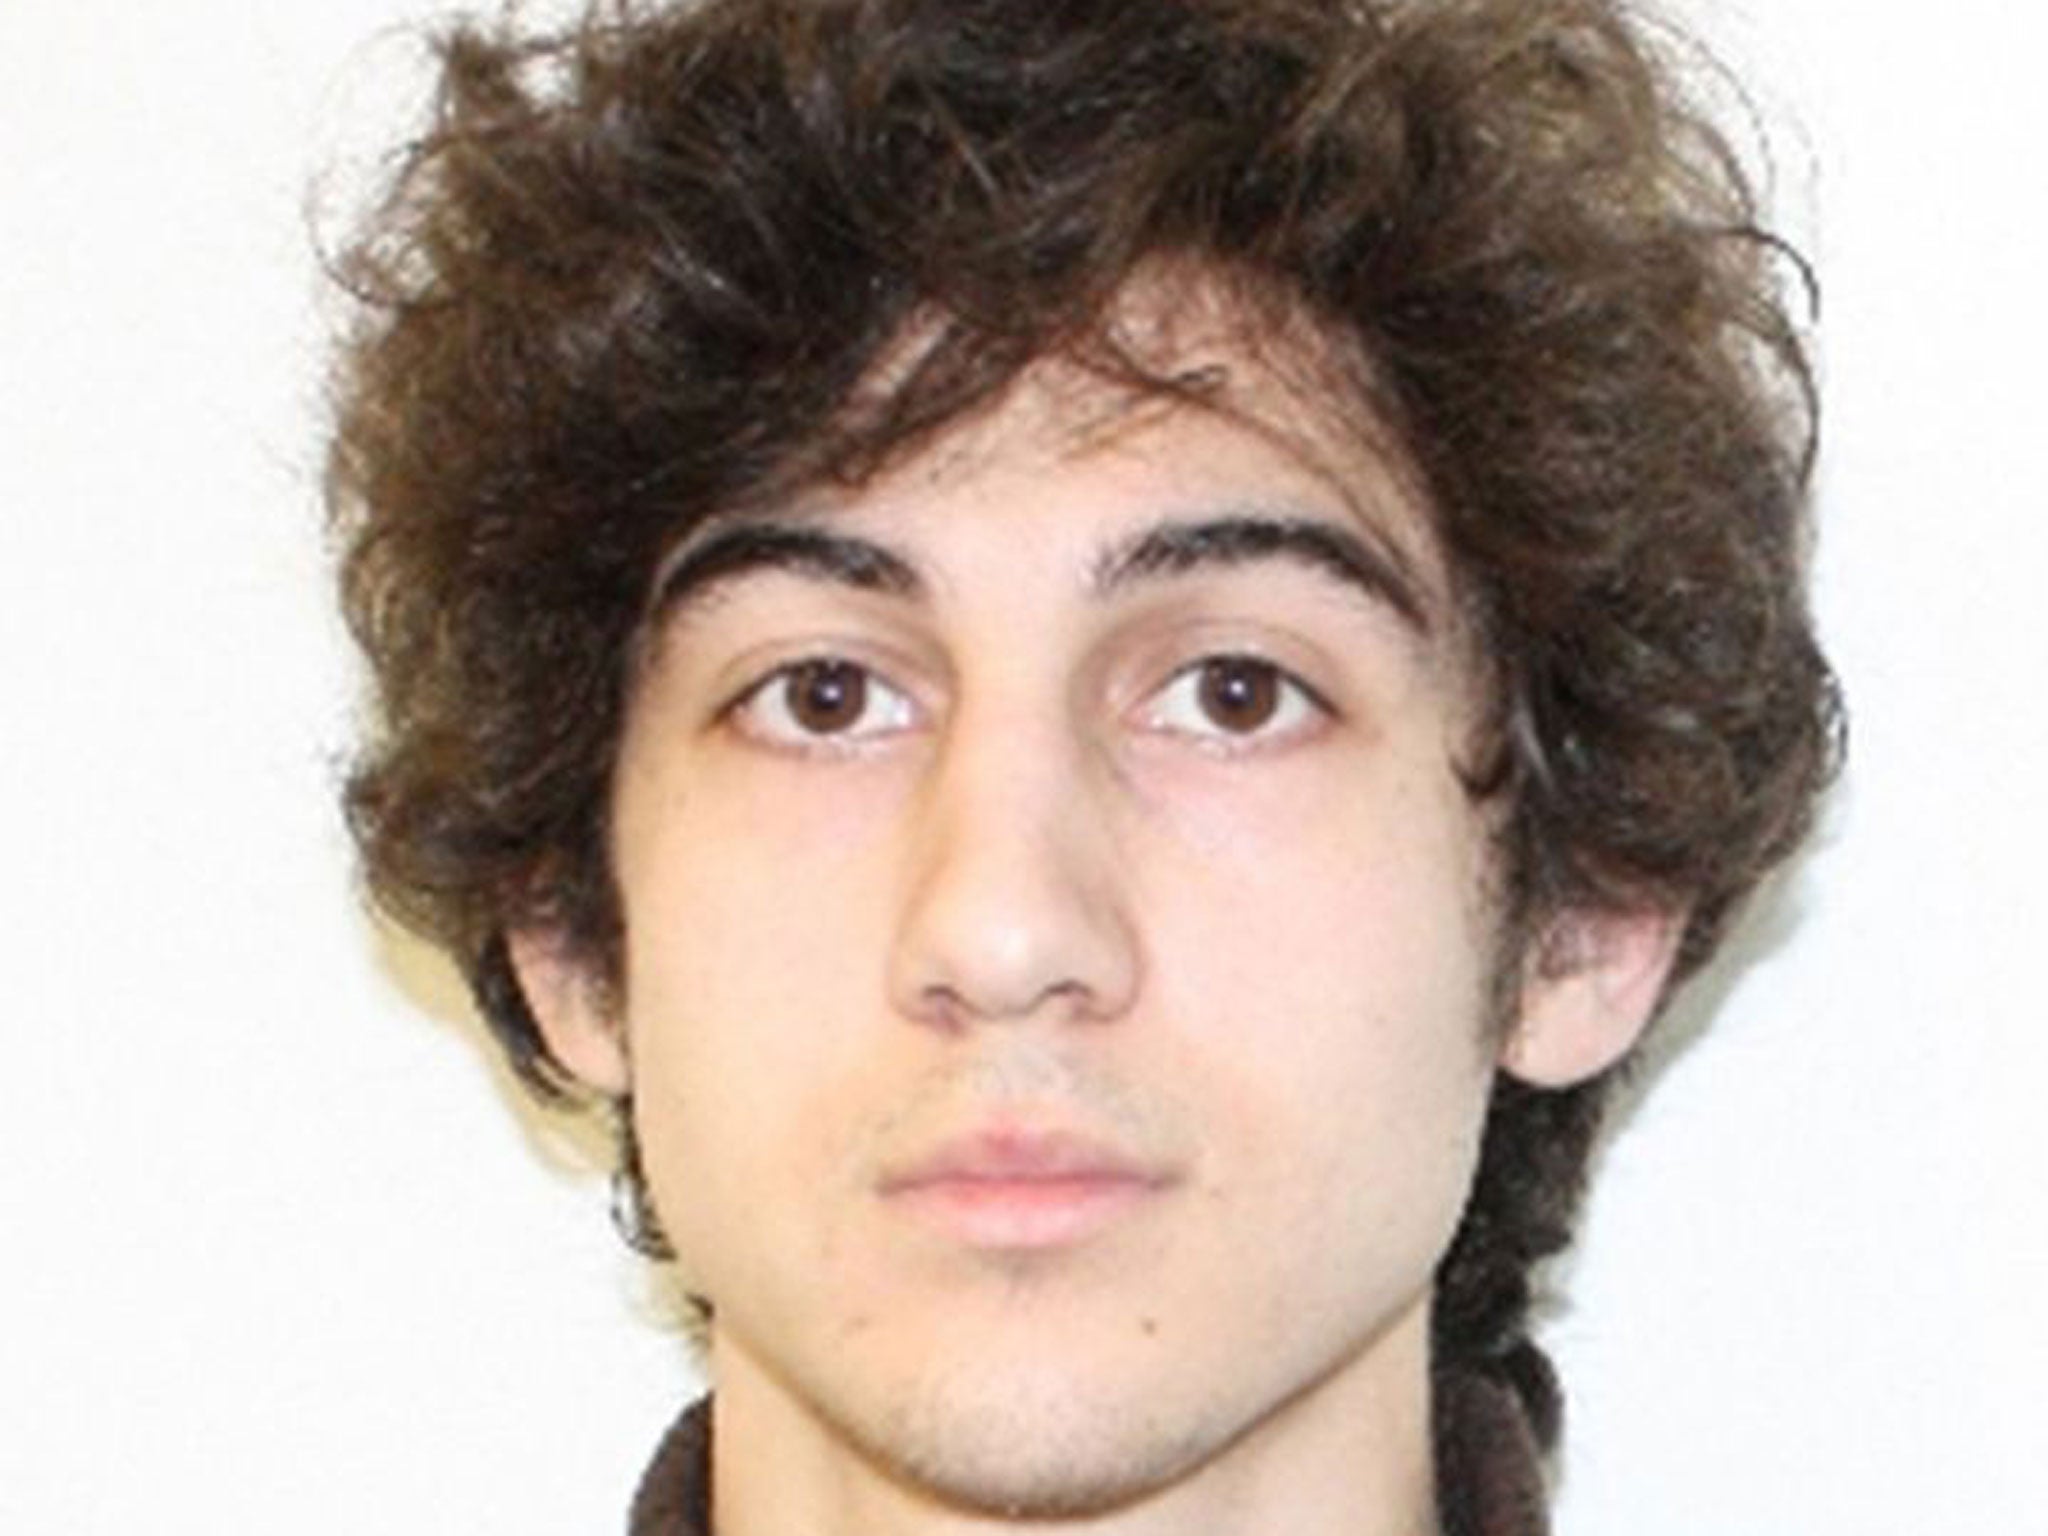 Boston Marathon suspect Dzhokhar Tsarnaev